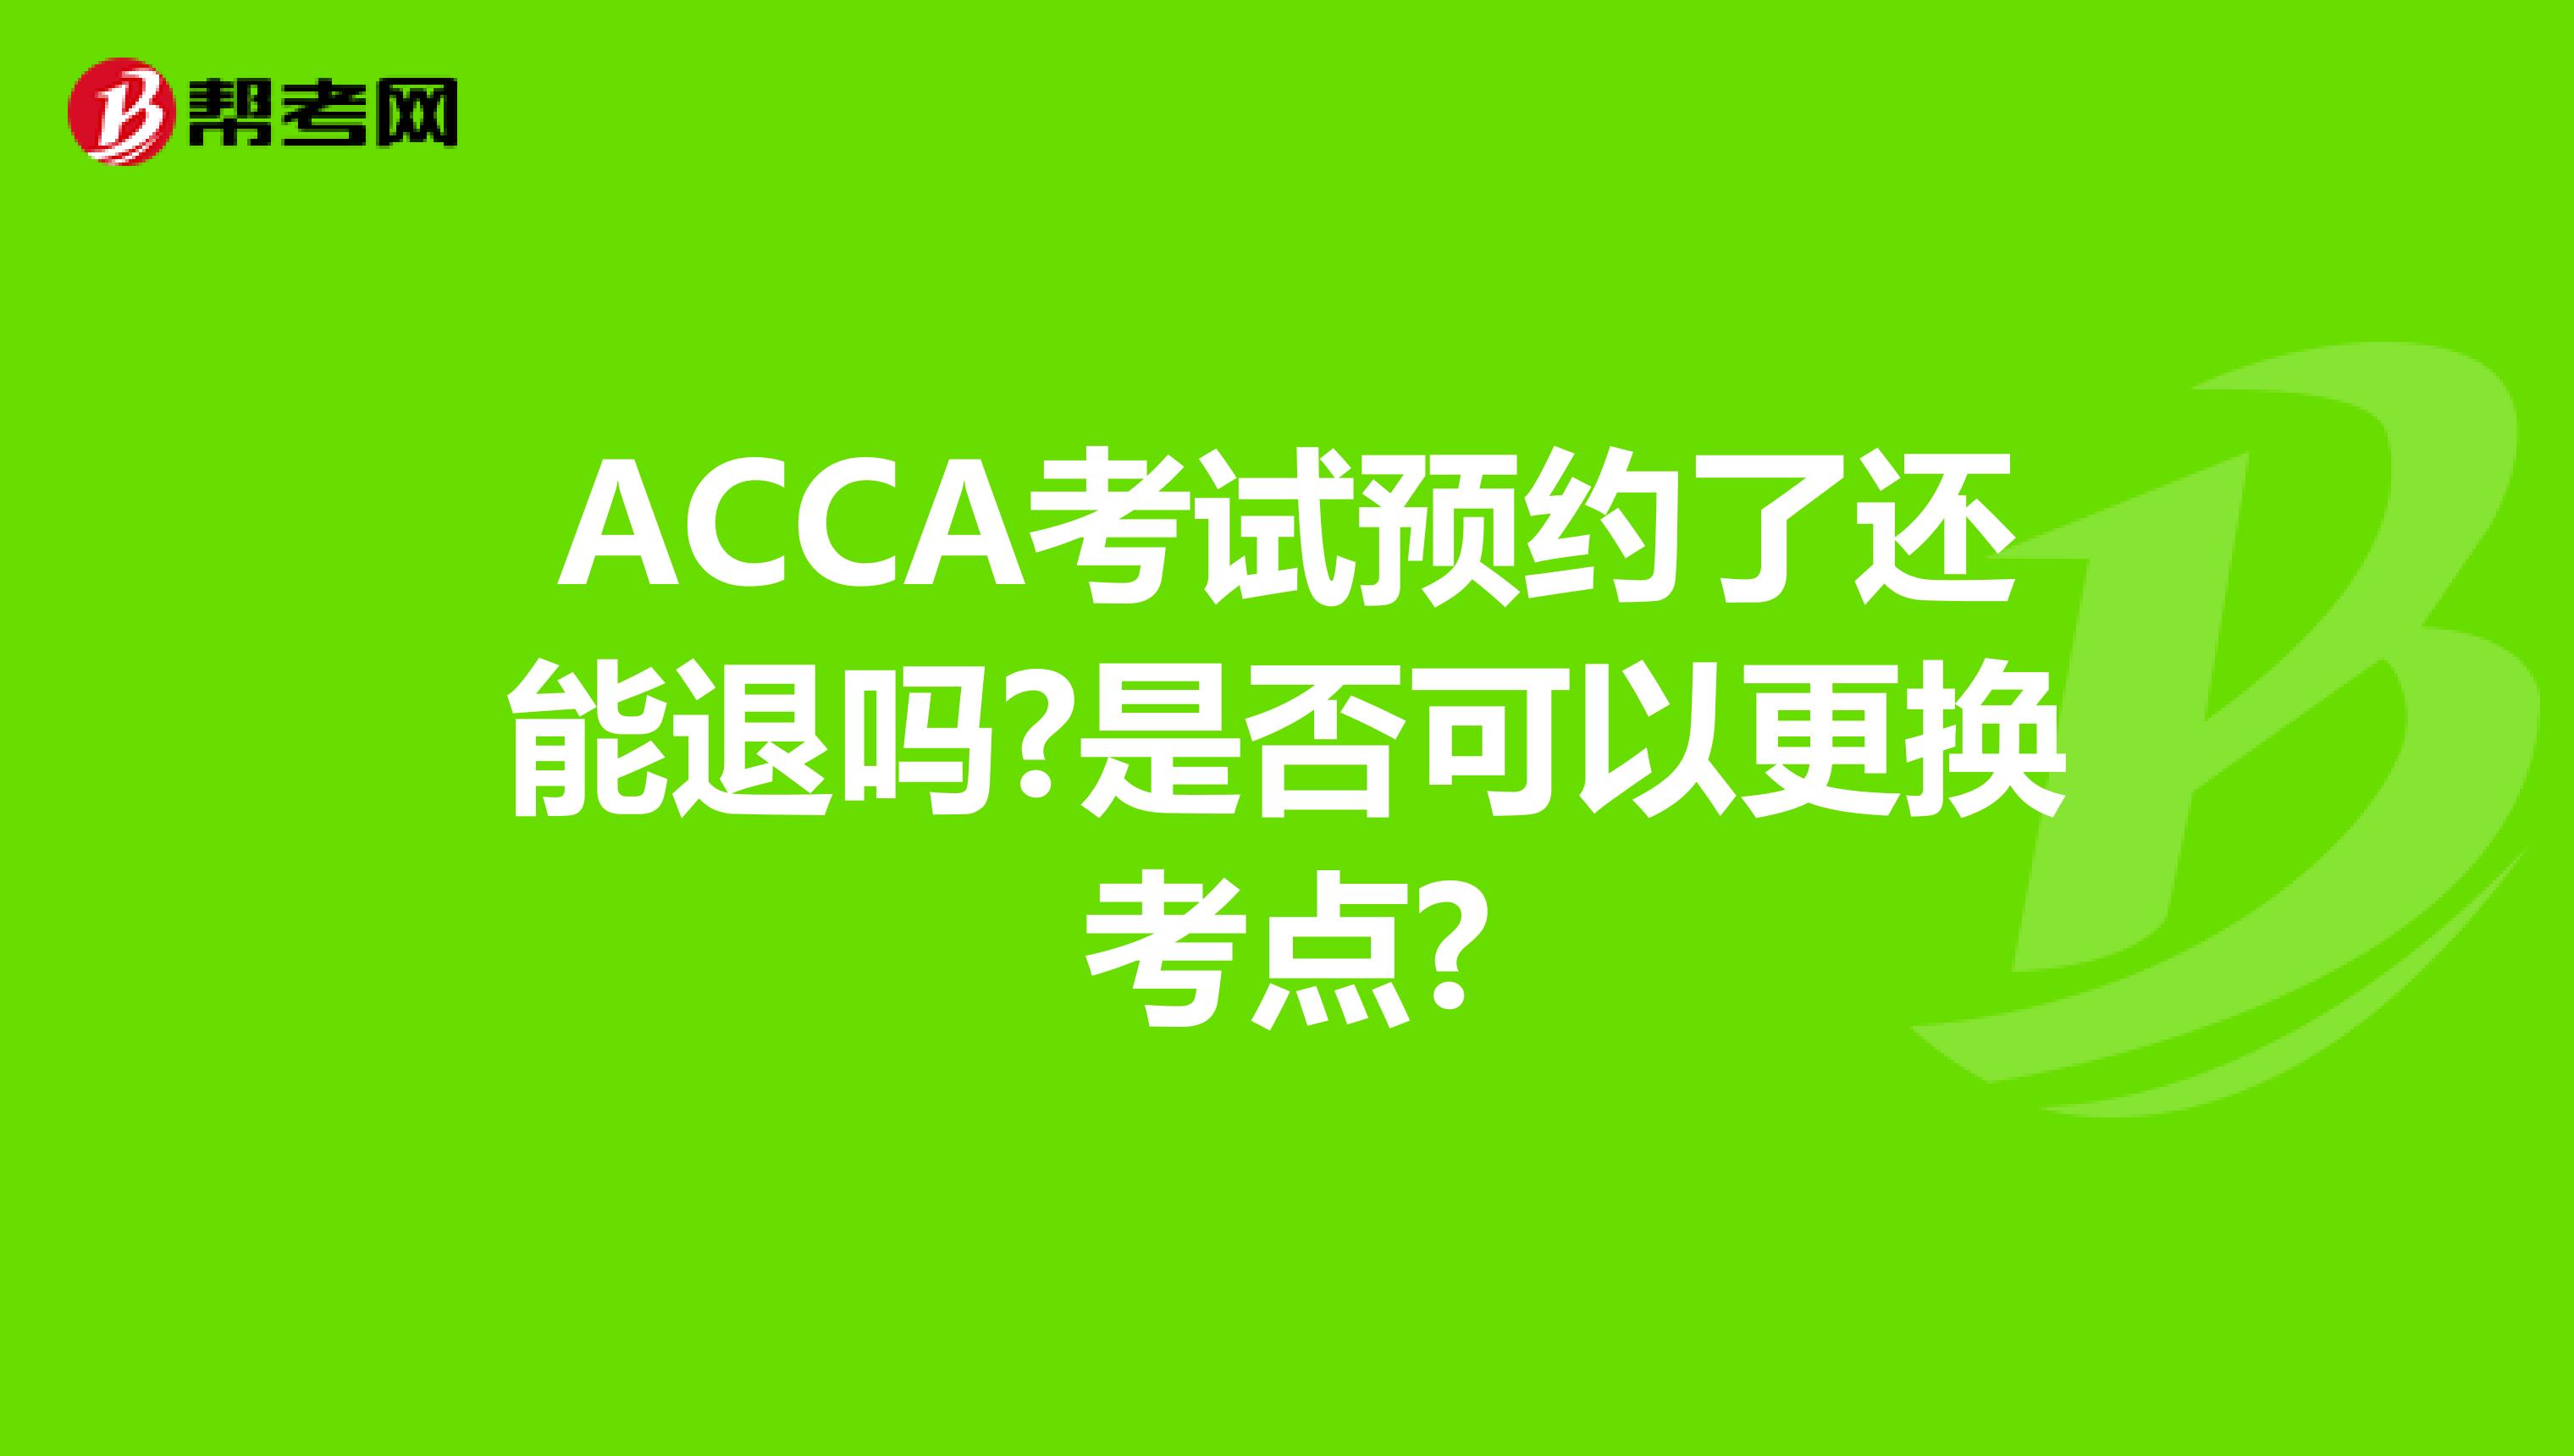 ACCA考试预约了还能退吗?是否可以更换考点?